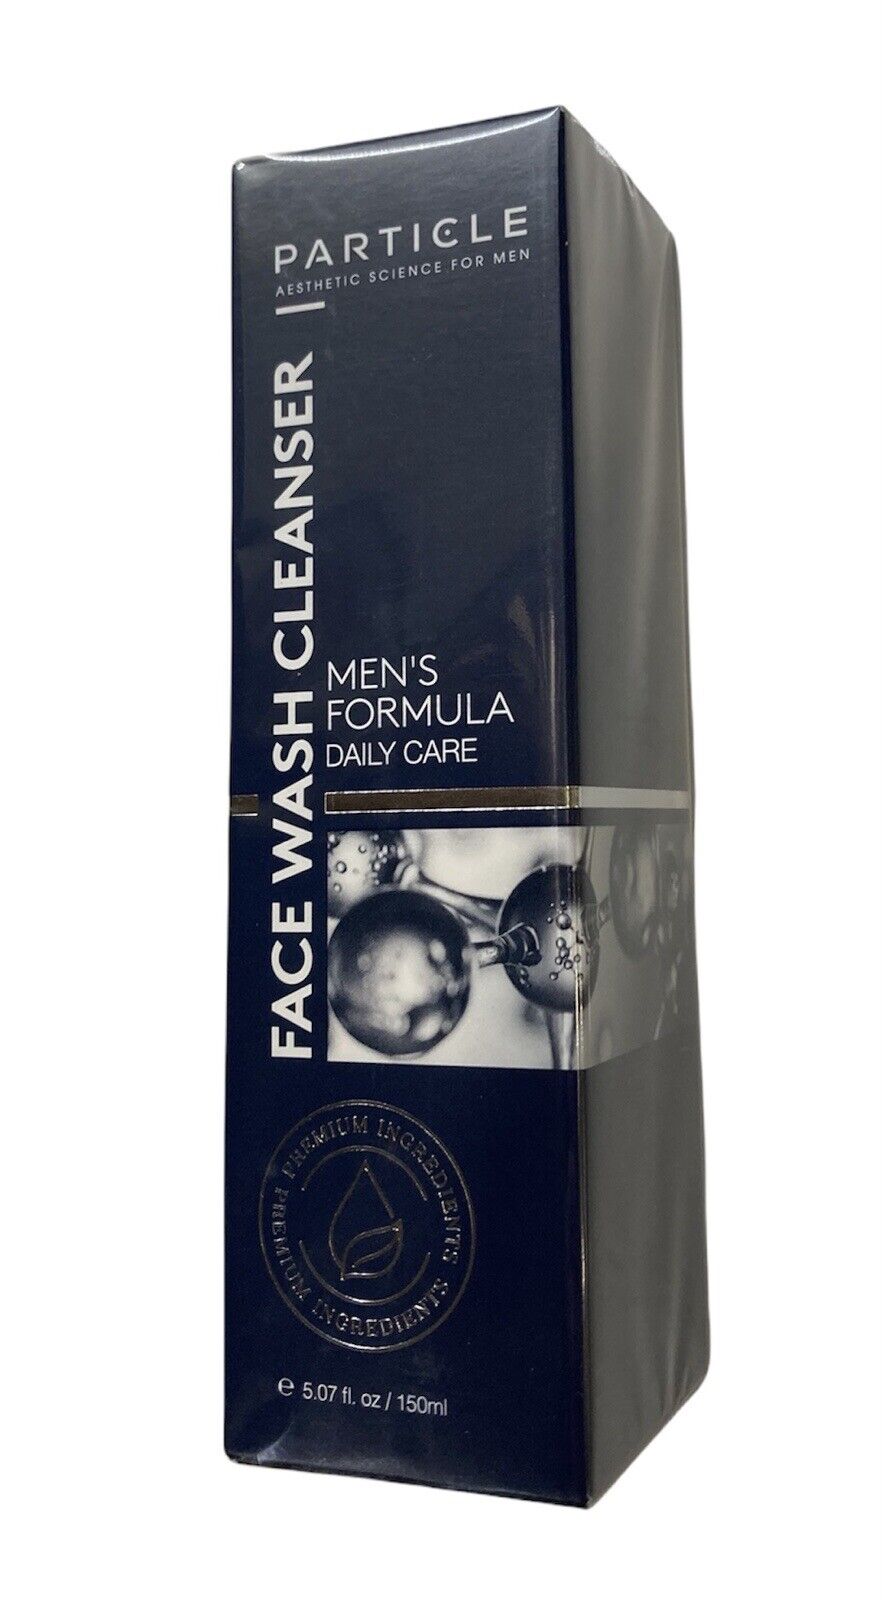 Particle Men's Face Wash 5.07 oz Hydrate Exfoliate Daily Anti-aging Skincare Men